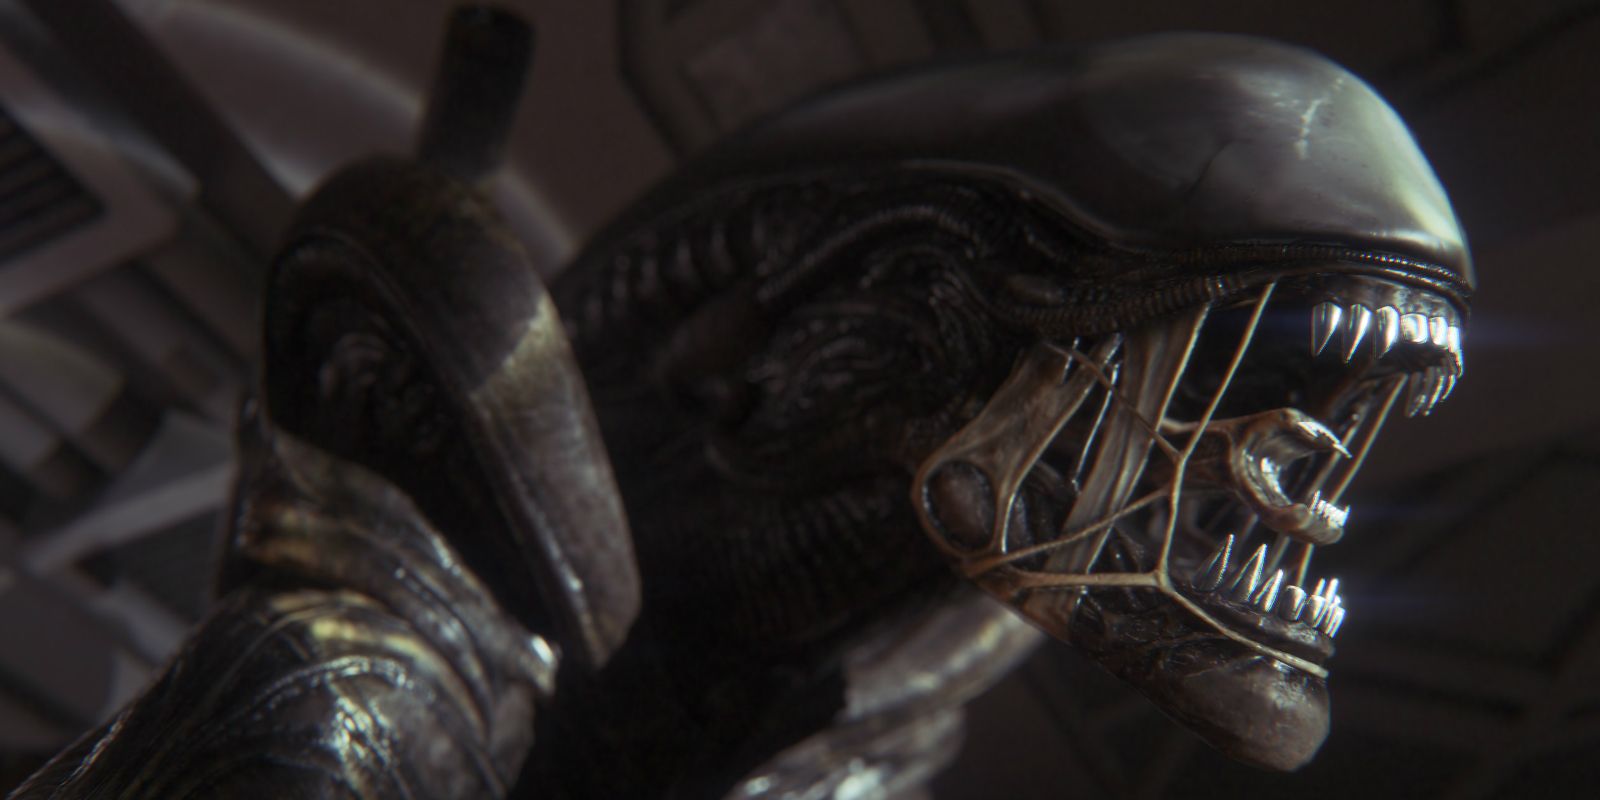 Alien covenant leaked images